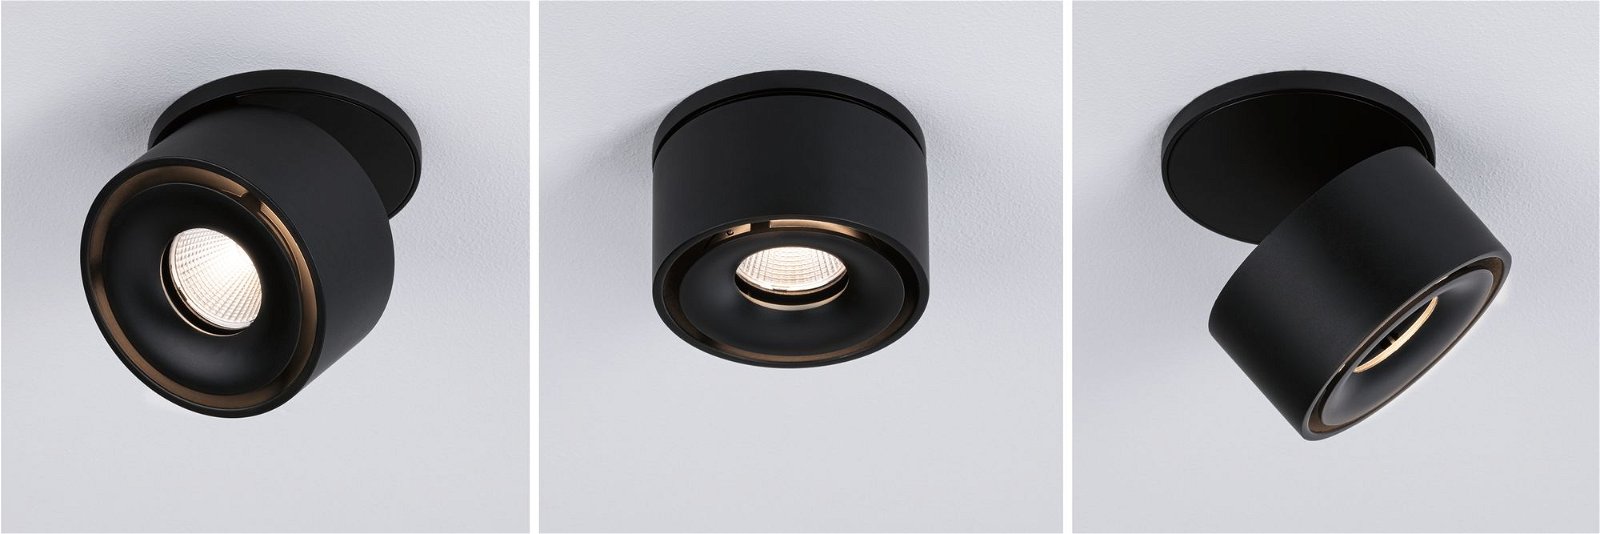 Spot encastré LED Spircle rond 78mm 8W 550lm 230V 3000K Noir mat